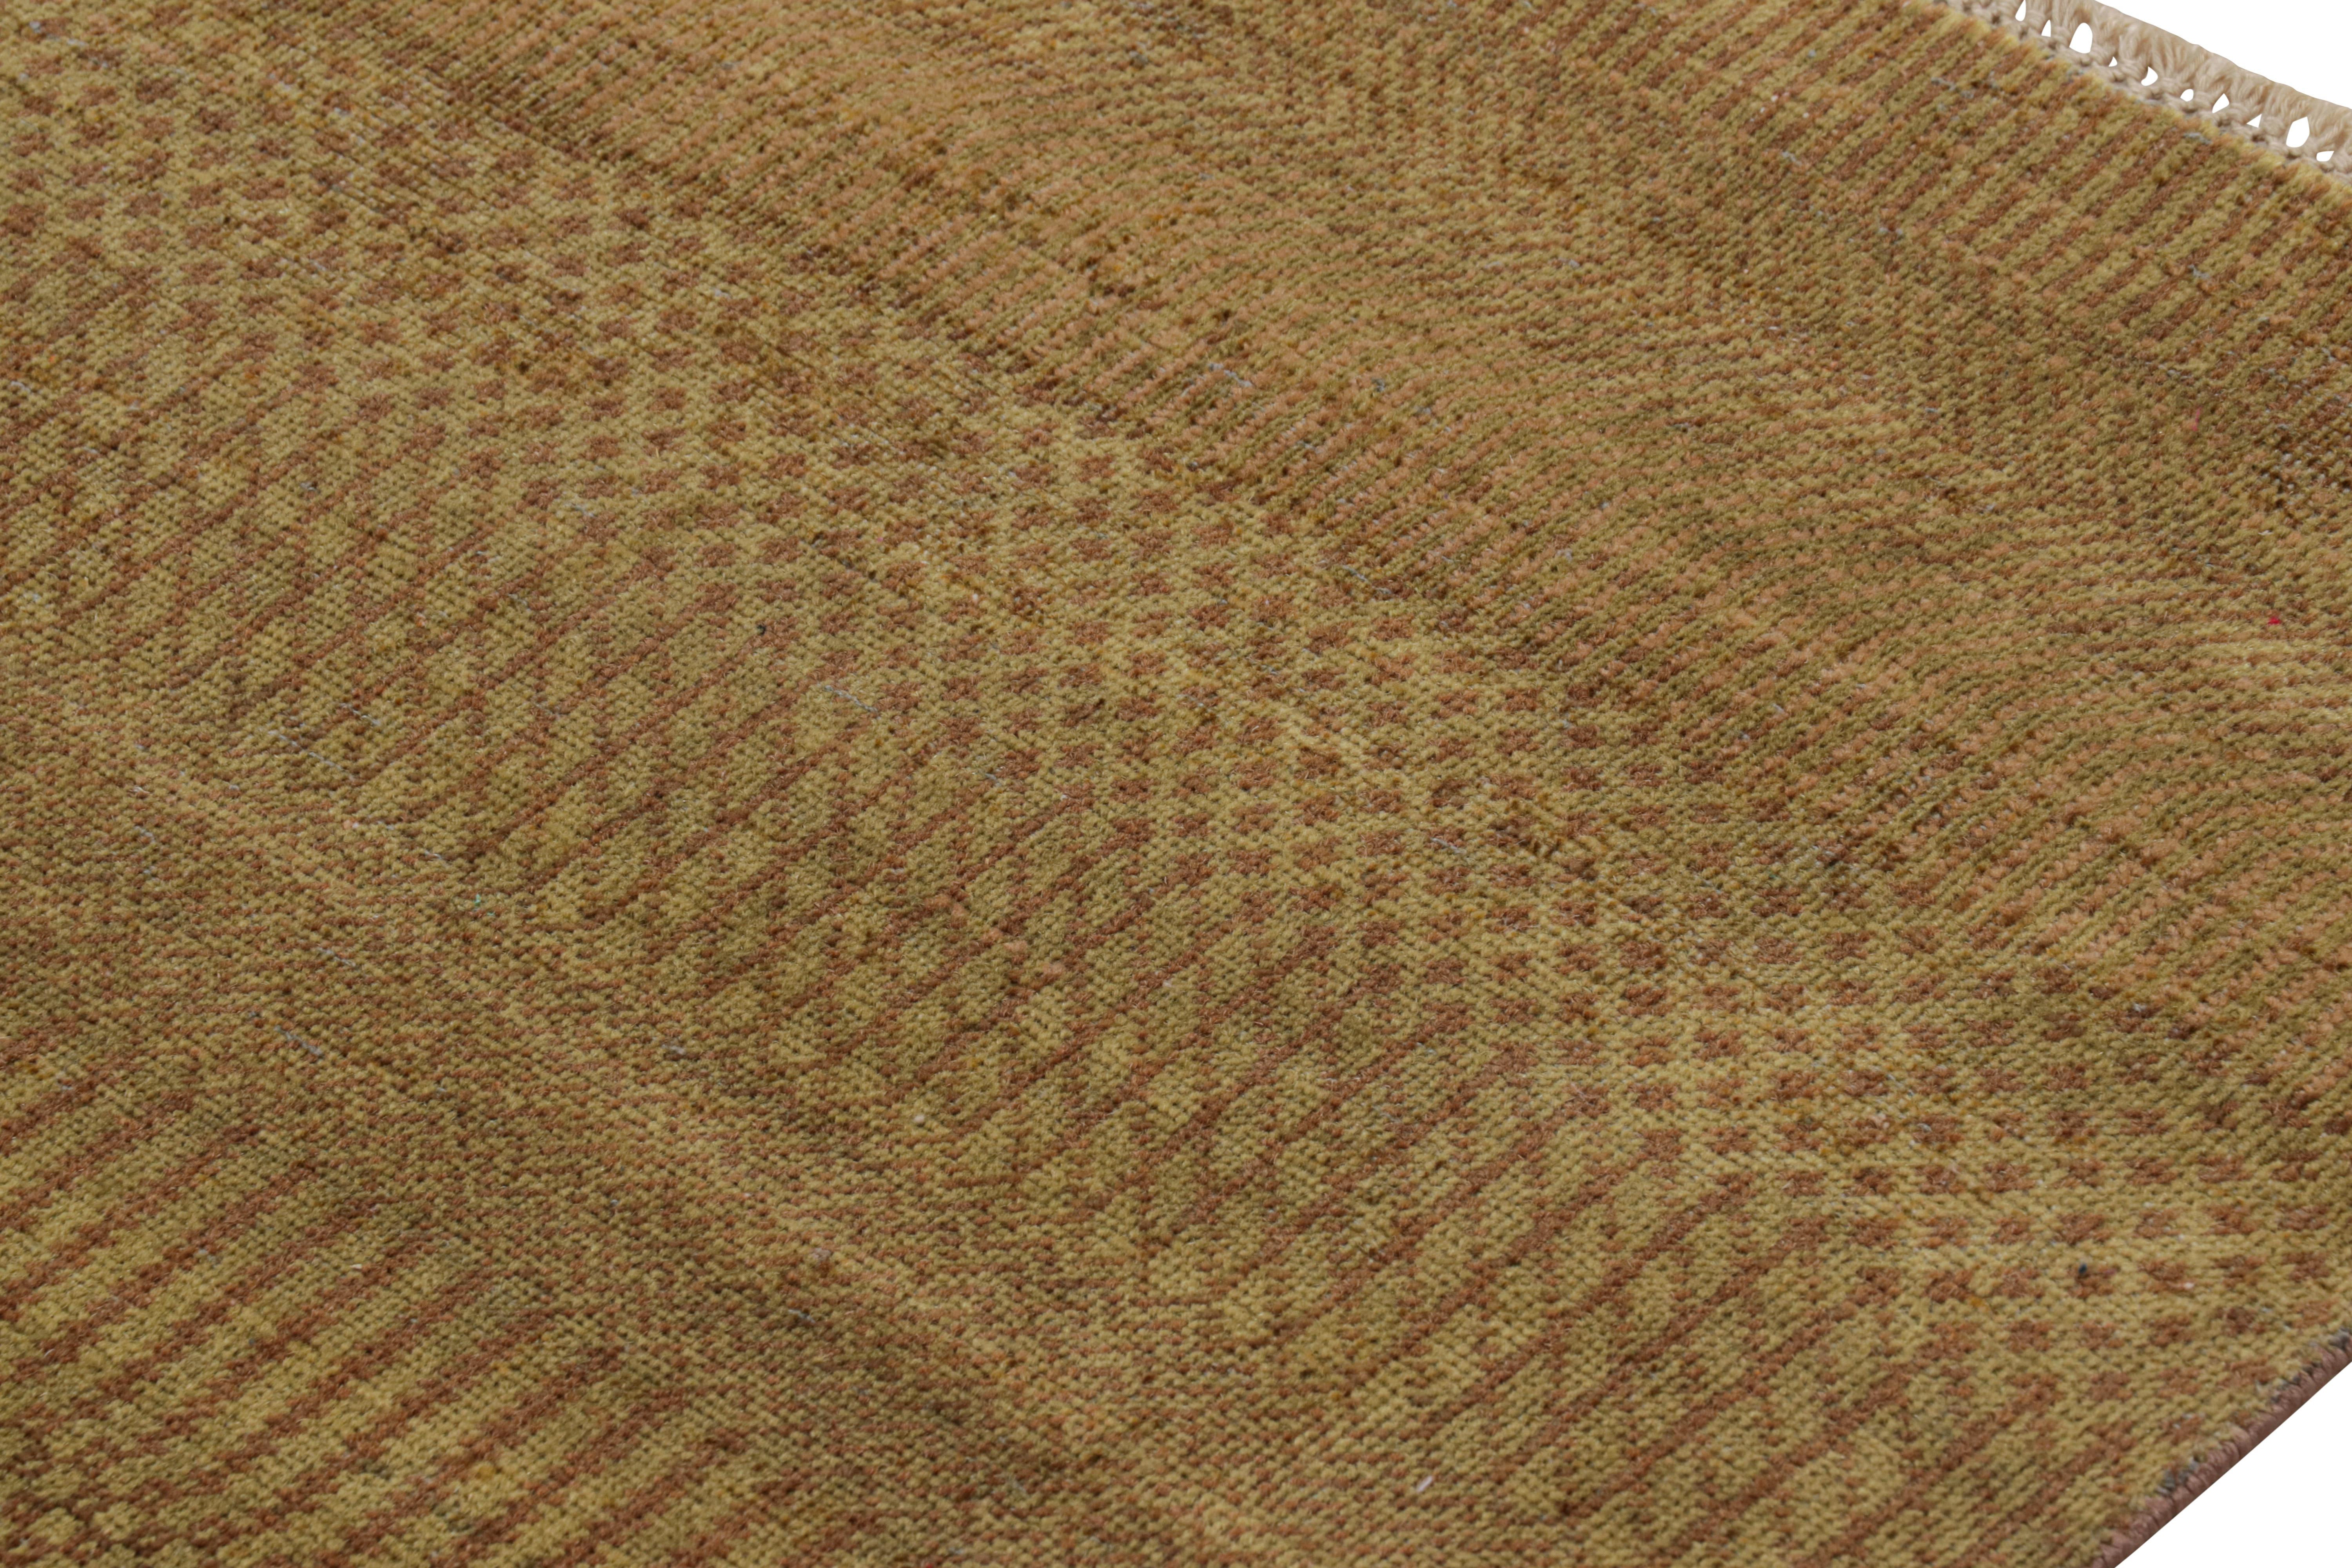 Rug & Kilim's Modern Textural Rug in Green, Brown and Gold Stripes and Striae (Tapis à rayures et à bandes vertes, brunes et dorées) Neuf - En vente à Long Island City, NY